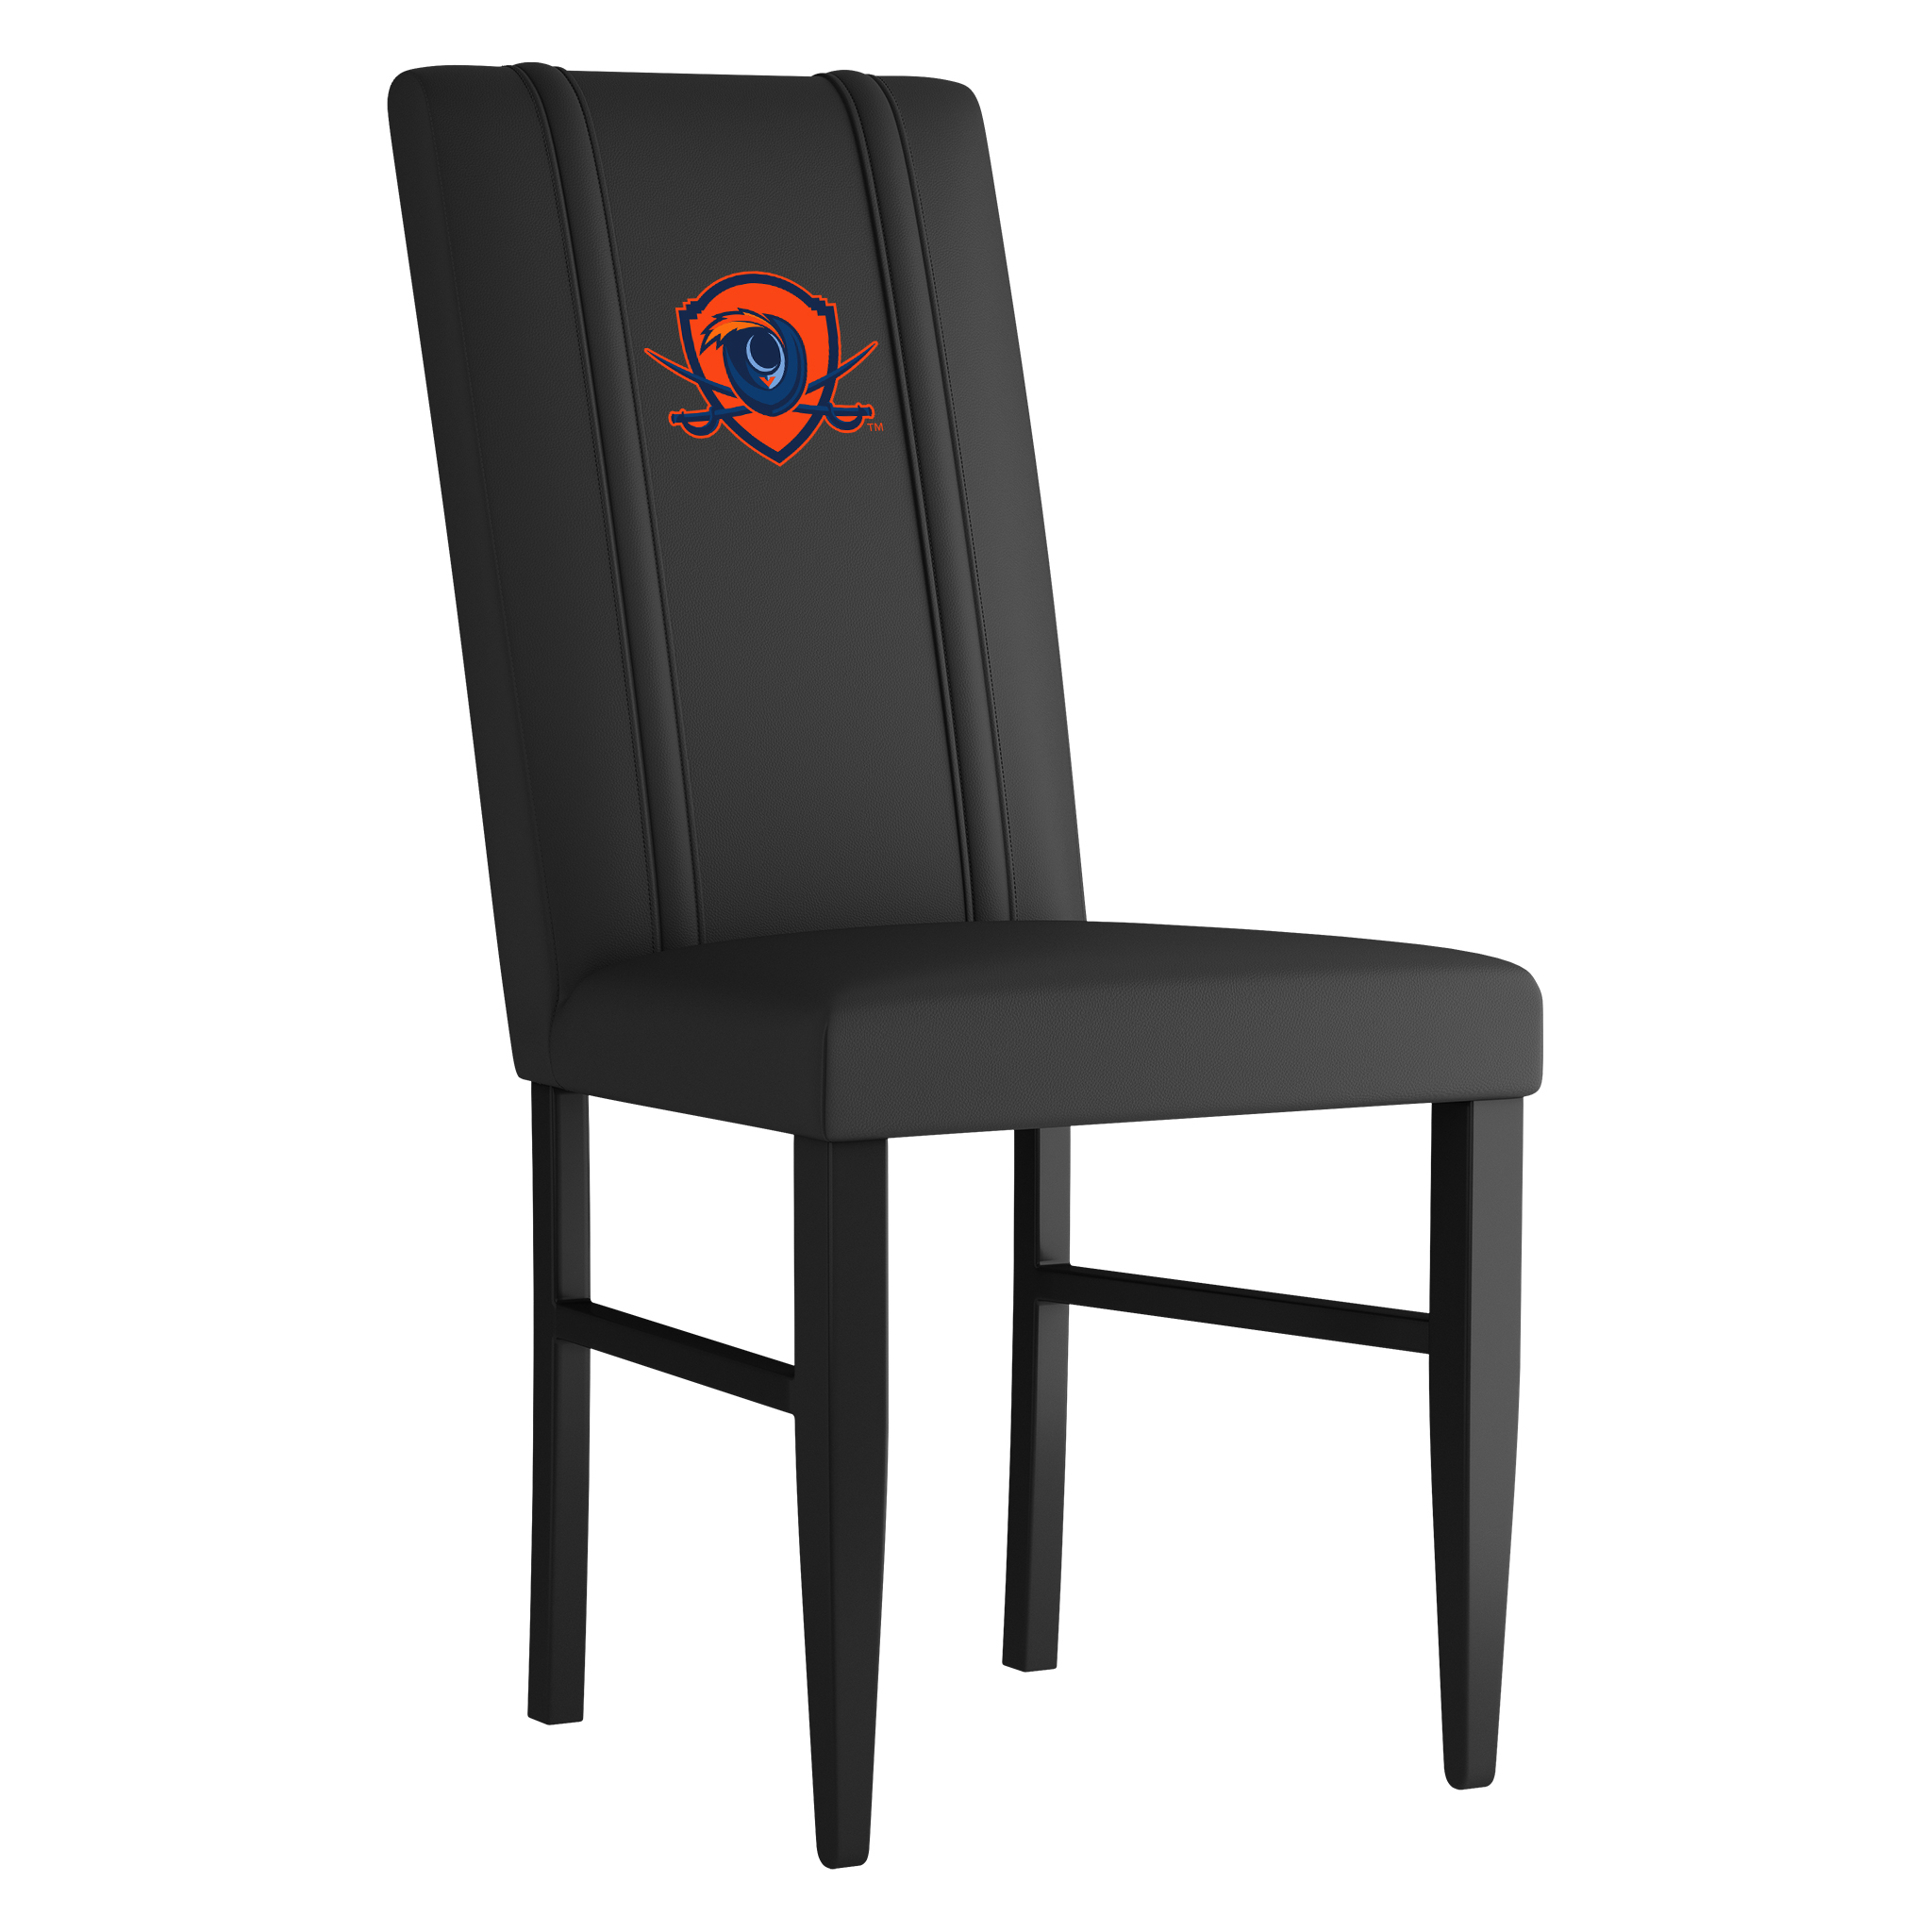 Virginia Cavaliers Side Chair 2000 With Virginia Cavaliers Secondary Logo